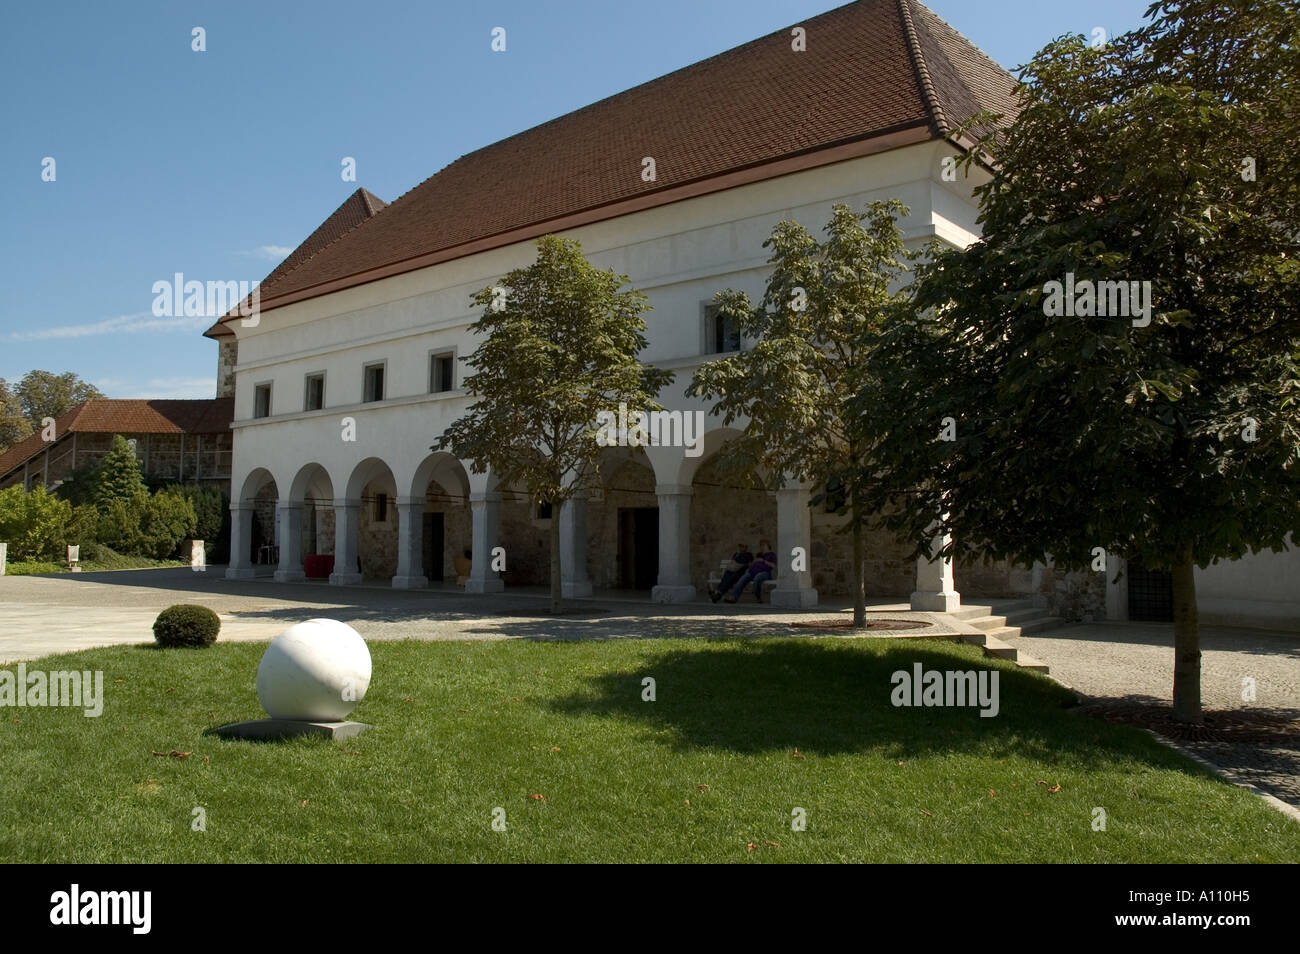 The castle Ljubljana Slovenia Europe Stock Photo